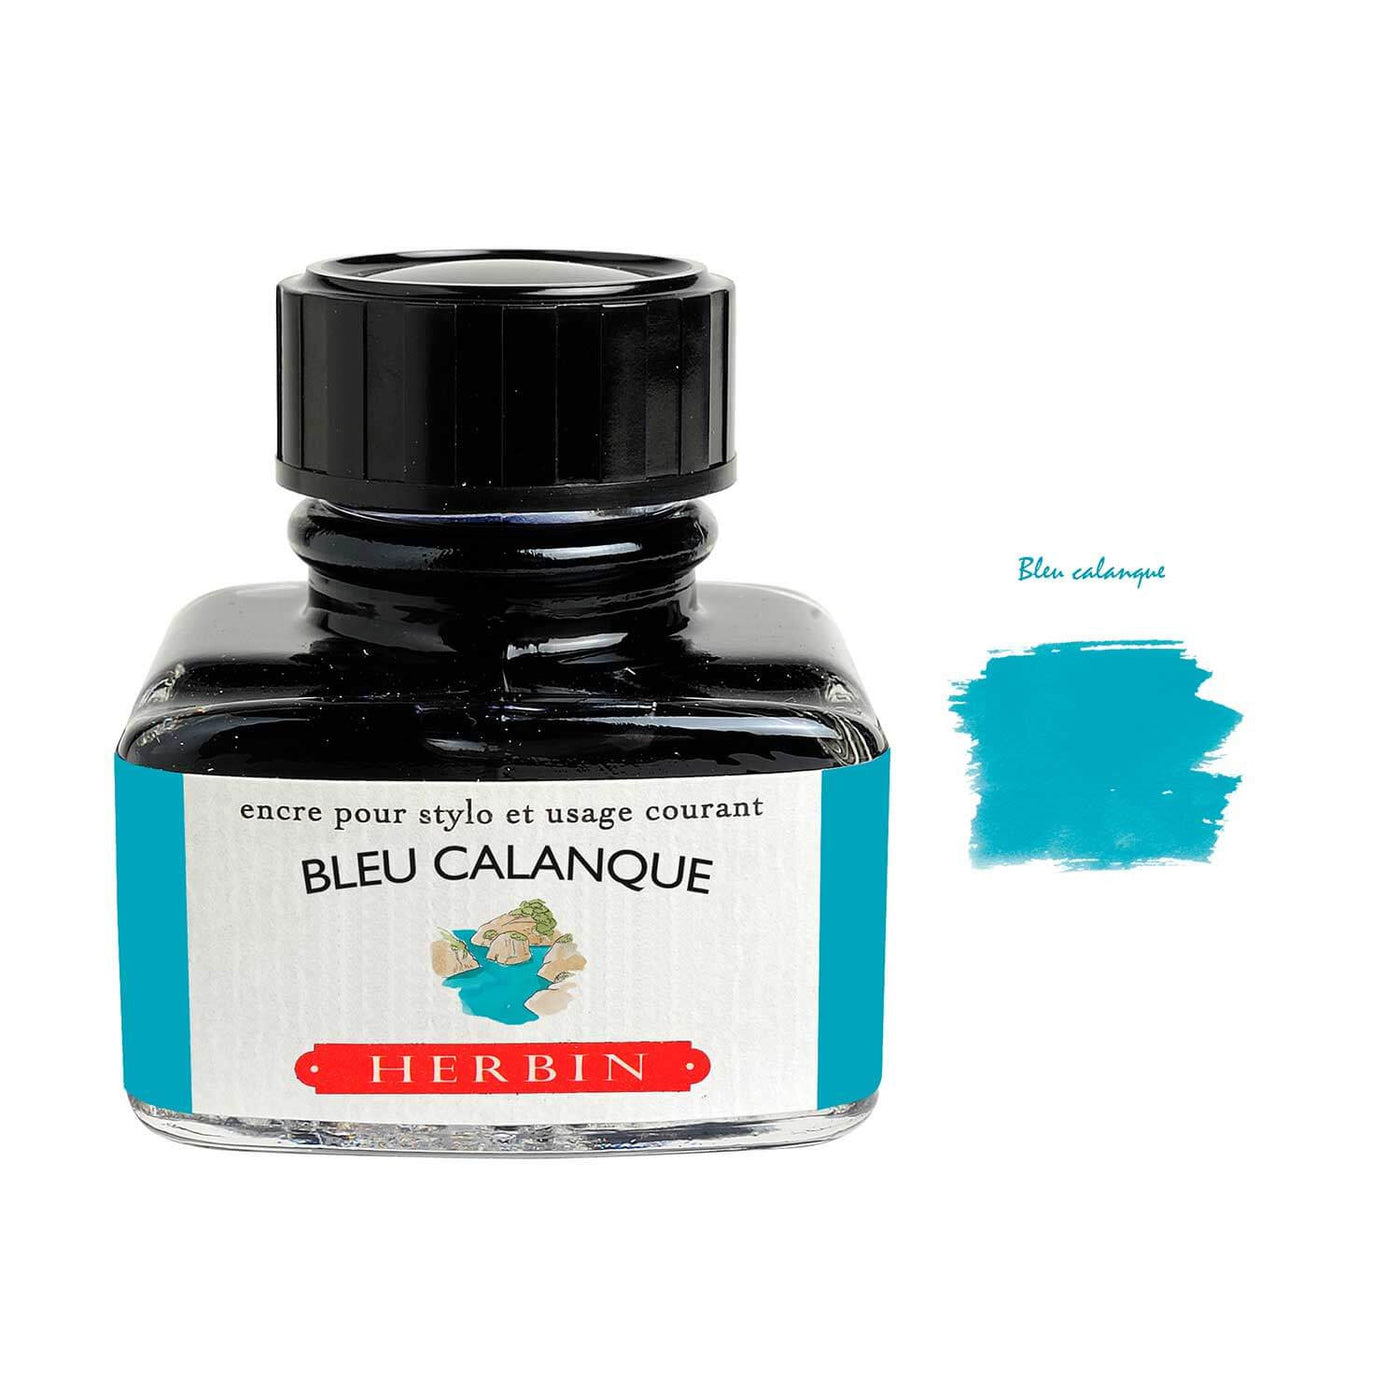 J Herbin "D" Series Ink Bottle Bleu Calanque (Turquoise) - 30ml 1